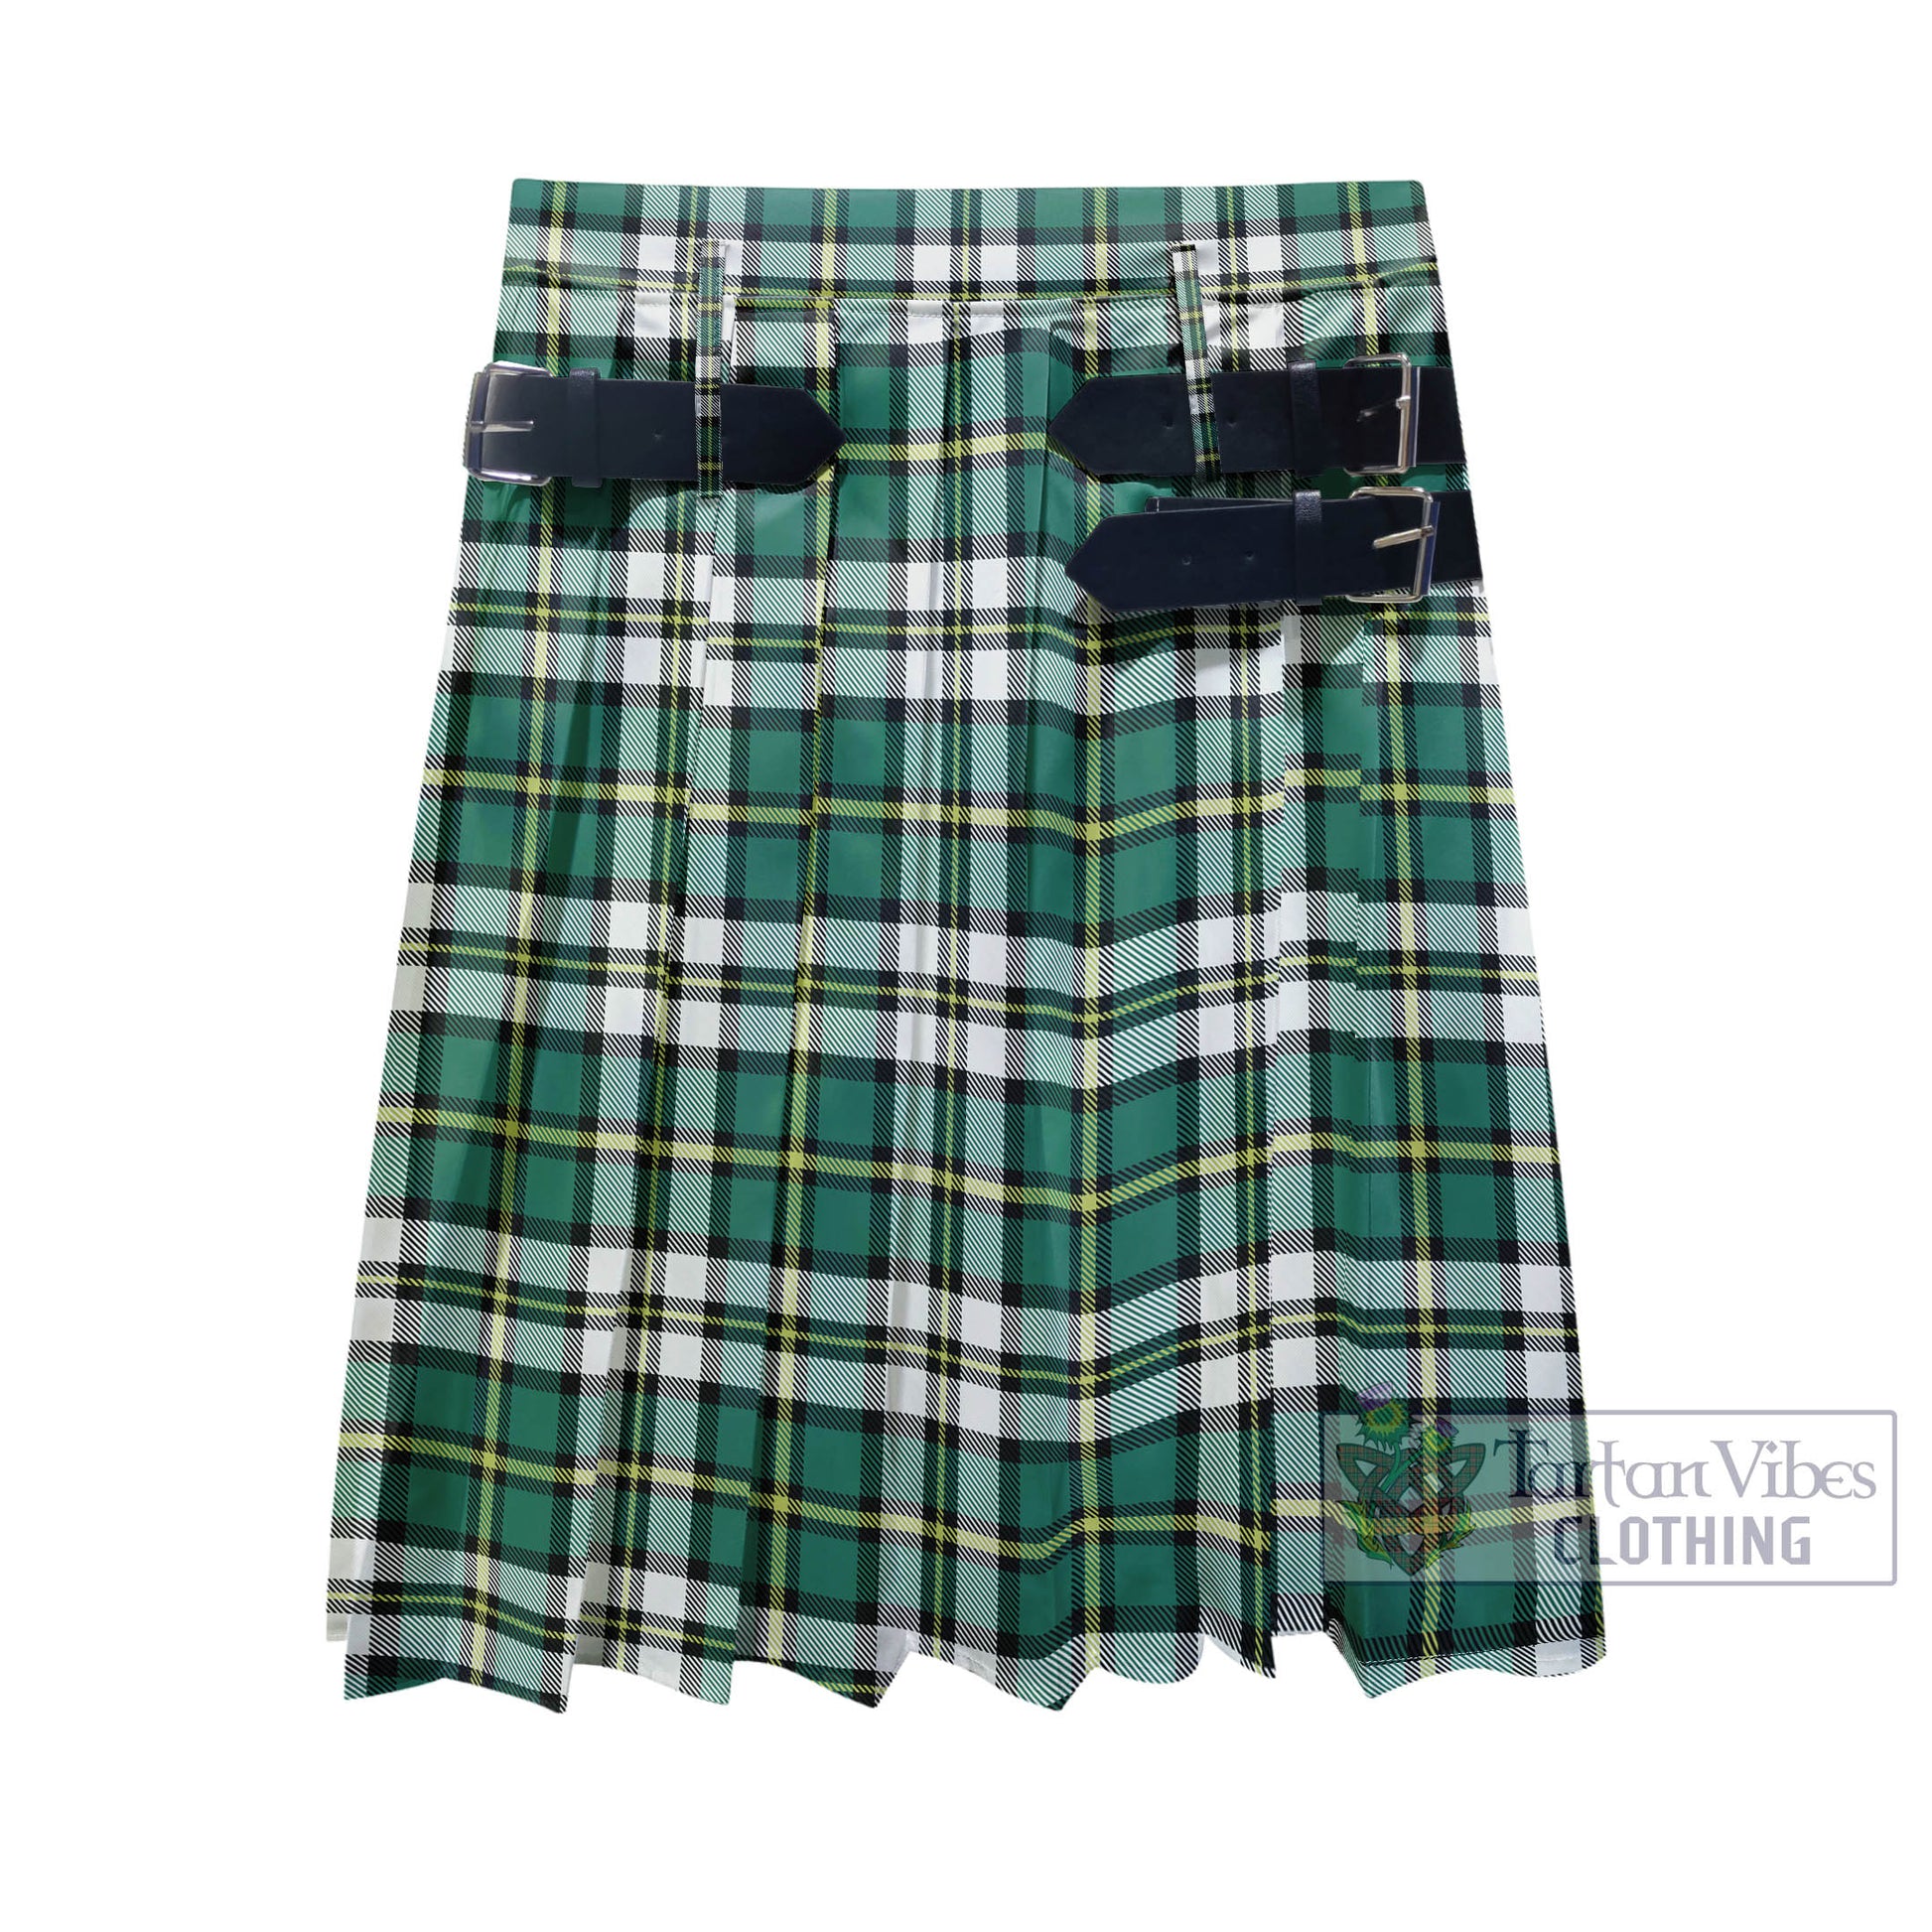 Tartan Vibes Clothing Cape Breton Island Canada Tartan Men's Pleated Skirt - Fashion Casual Retro Scottish Style